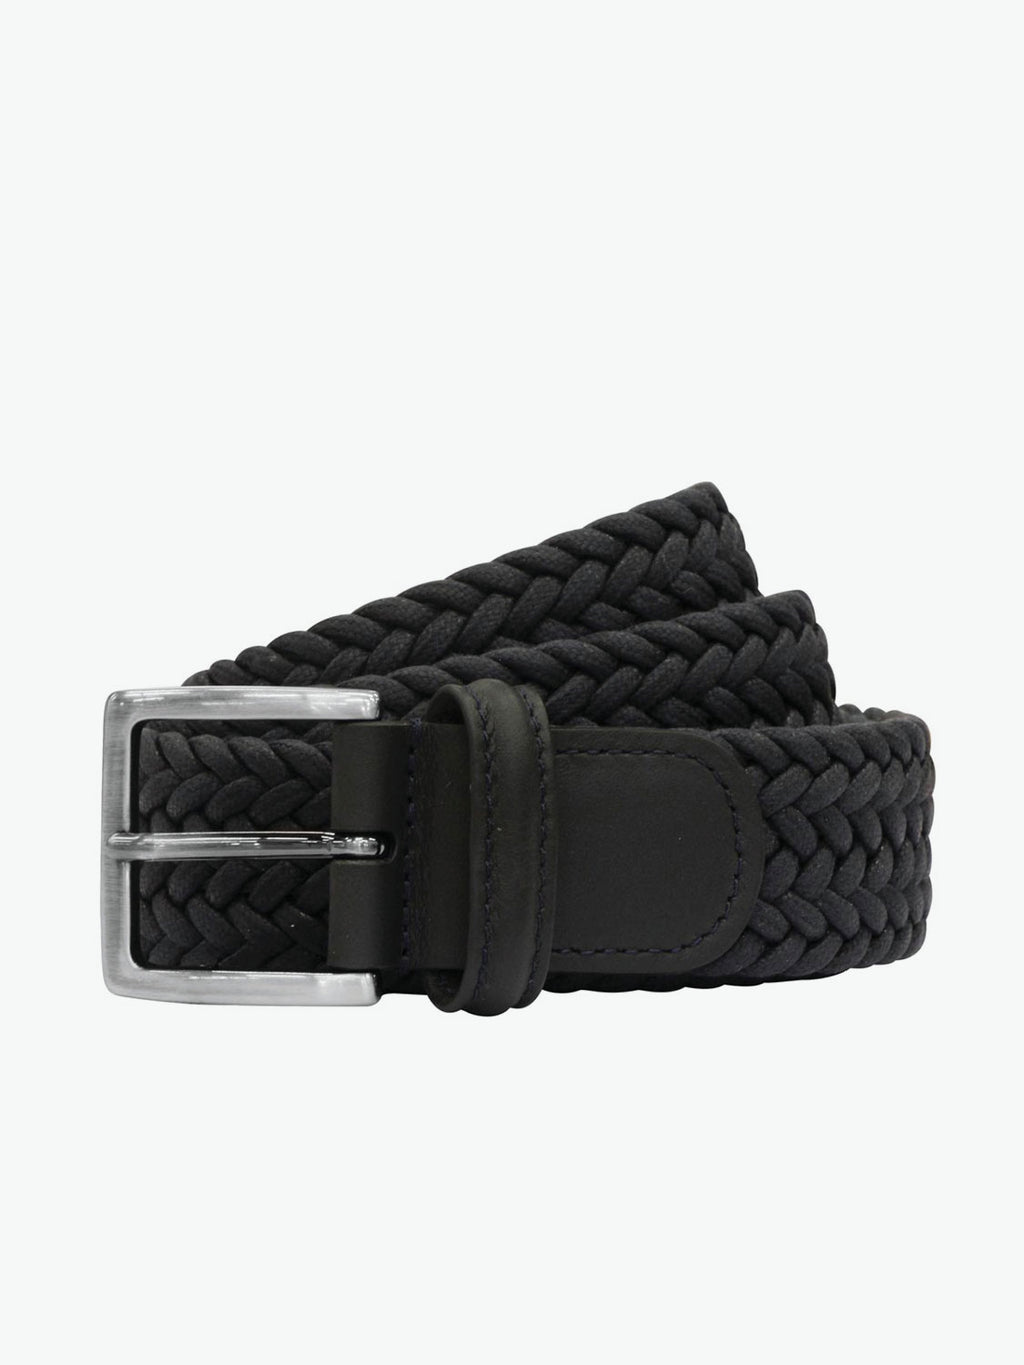 Anderson's Black Leather Western Belt